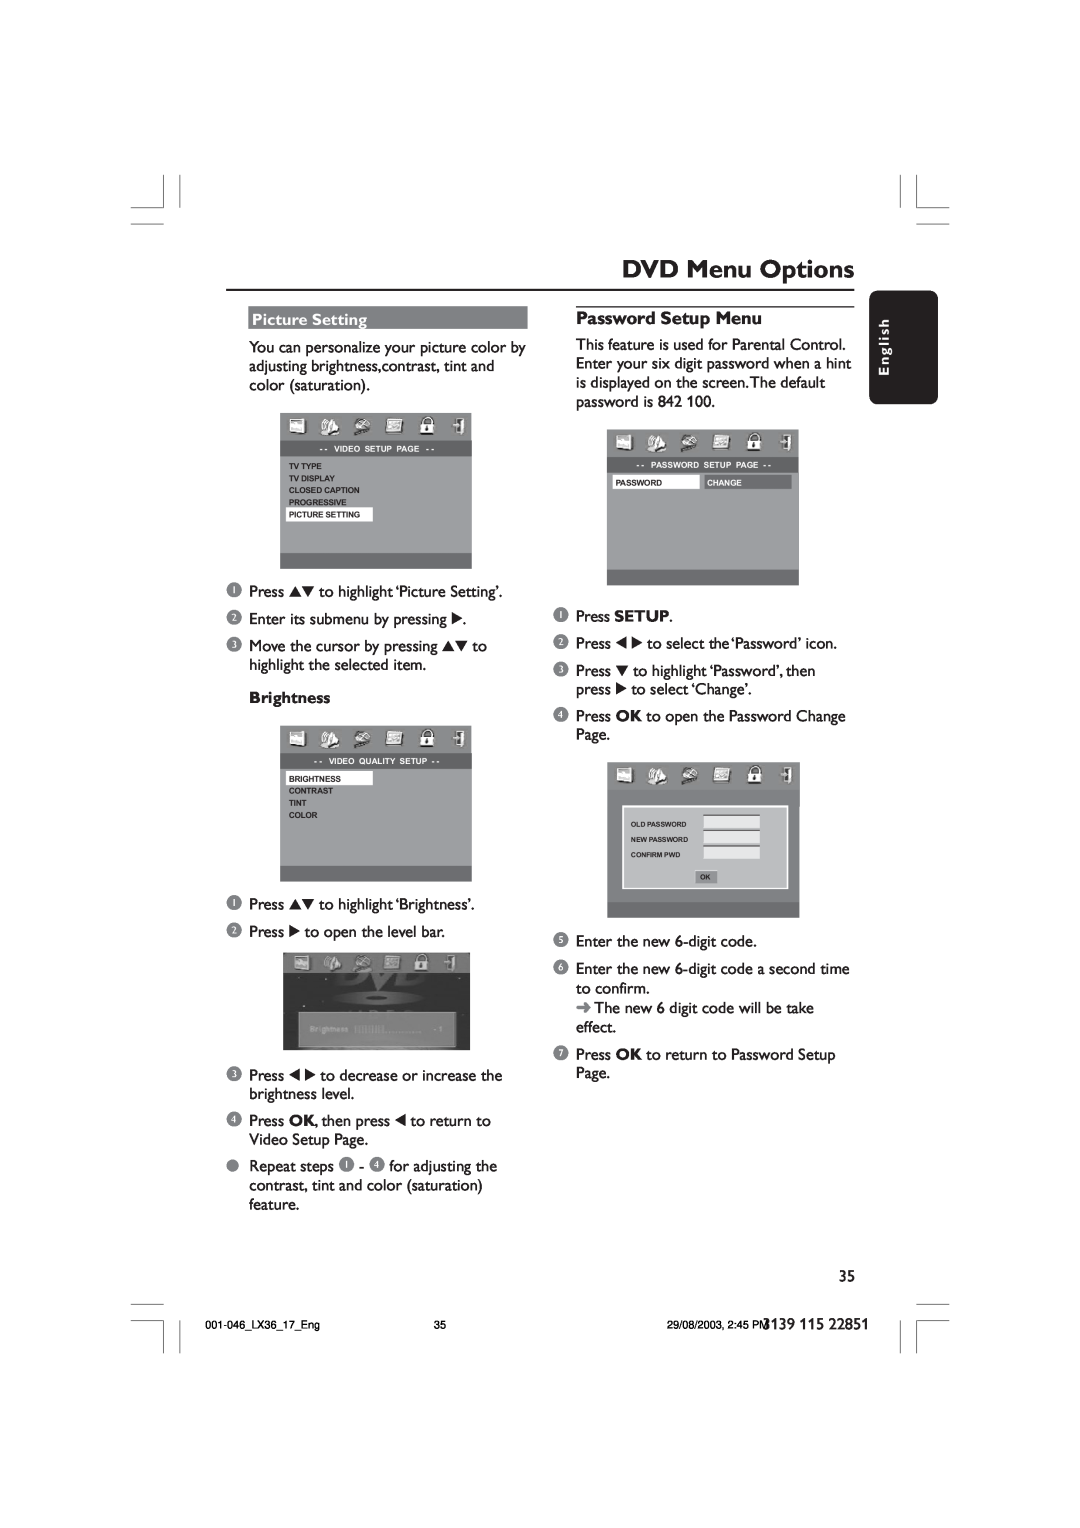 Philips LX3600 warranty Password Setup Menu, DVD Menu Options, Picture Setting, Brightness 